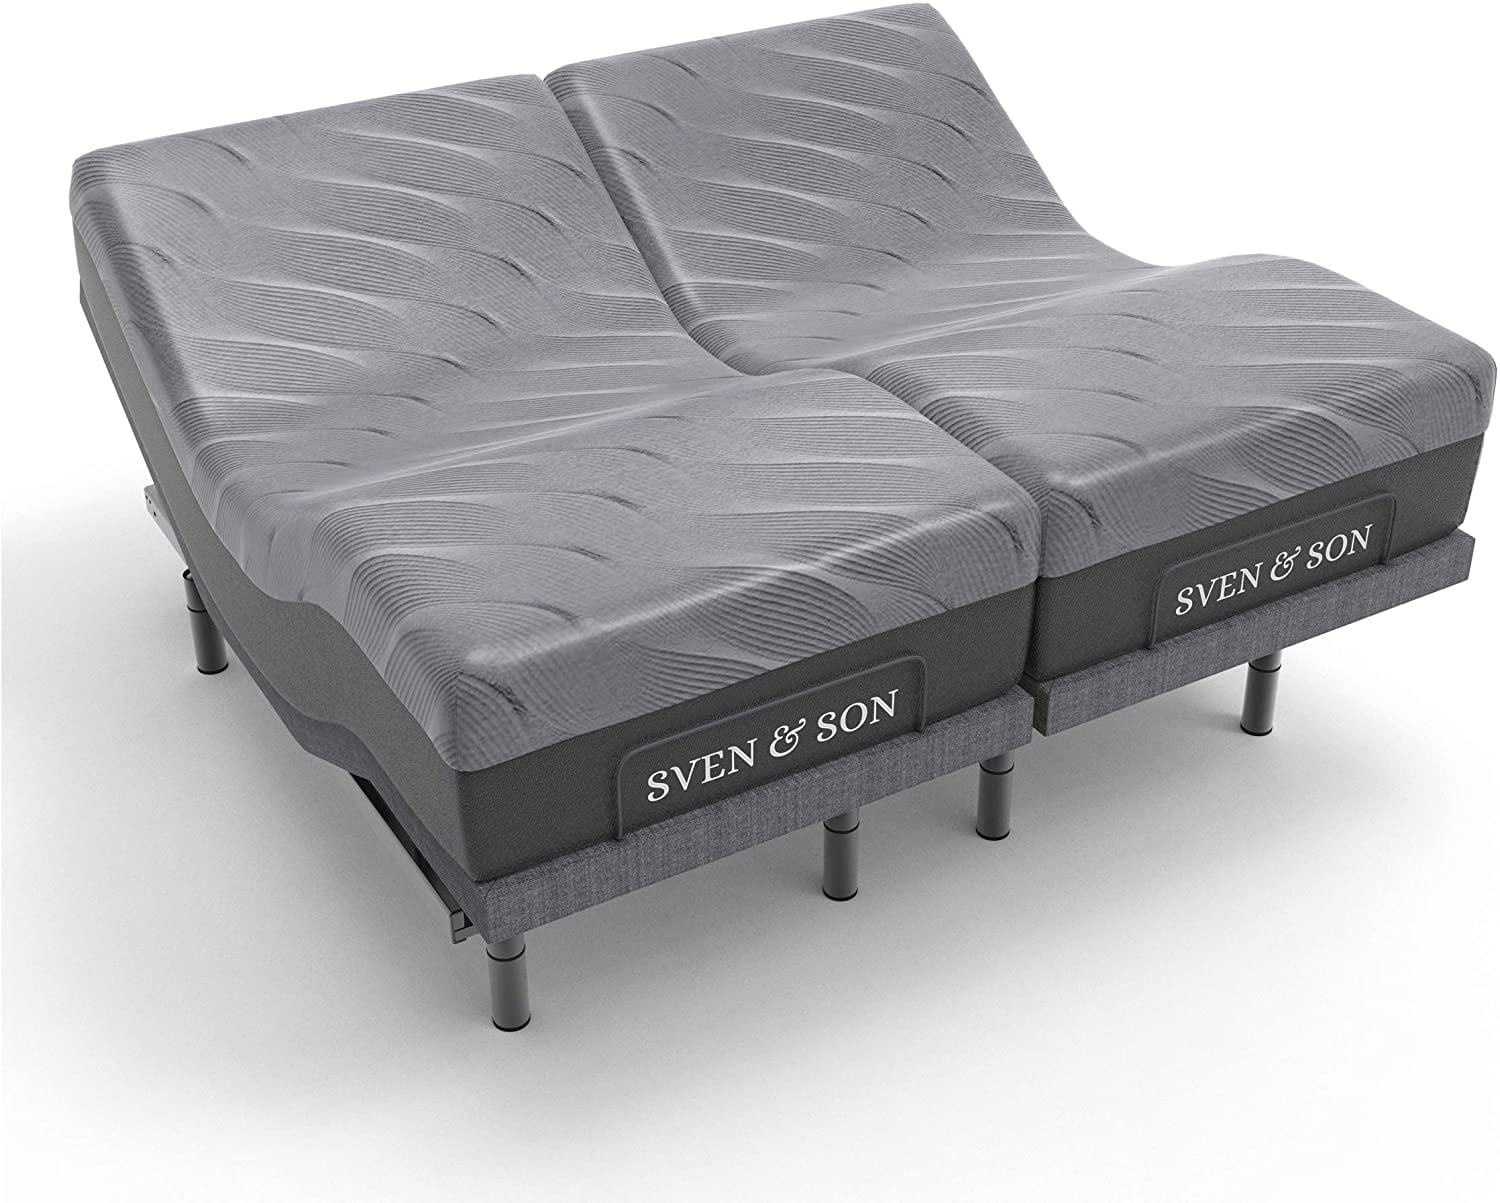 Sven Son Split King Adjustable Bed, Can A Hybrid Mattress Be Used On An Adjustable Bed Frame